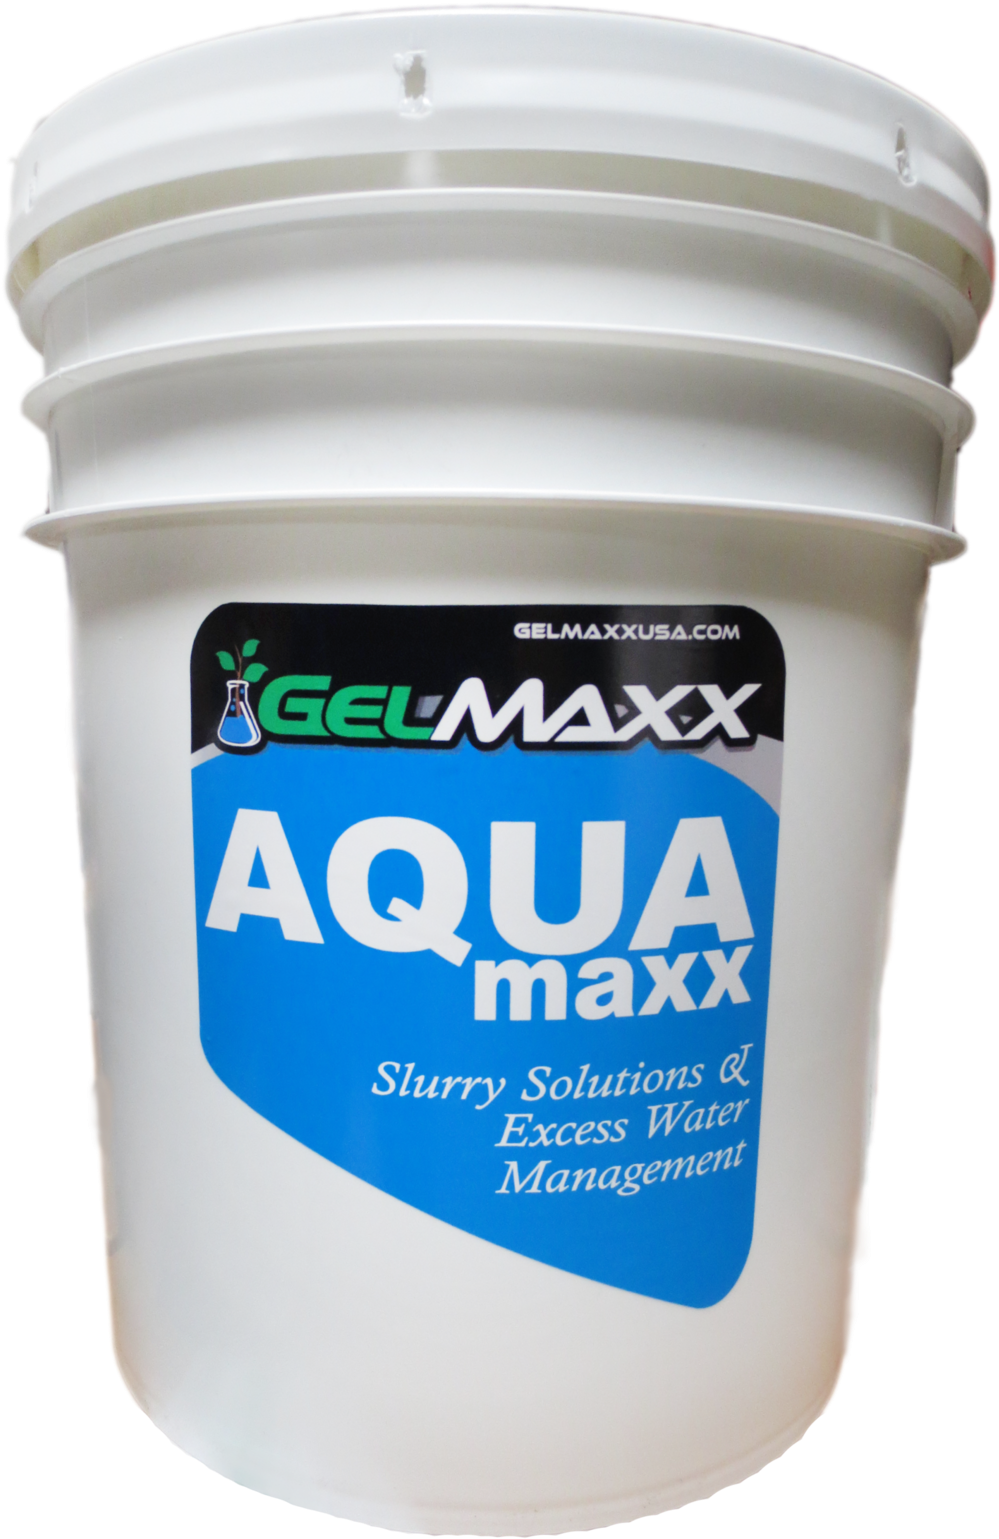 Gelmaxx Aqua Maxx Container PNG